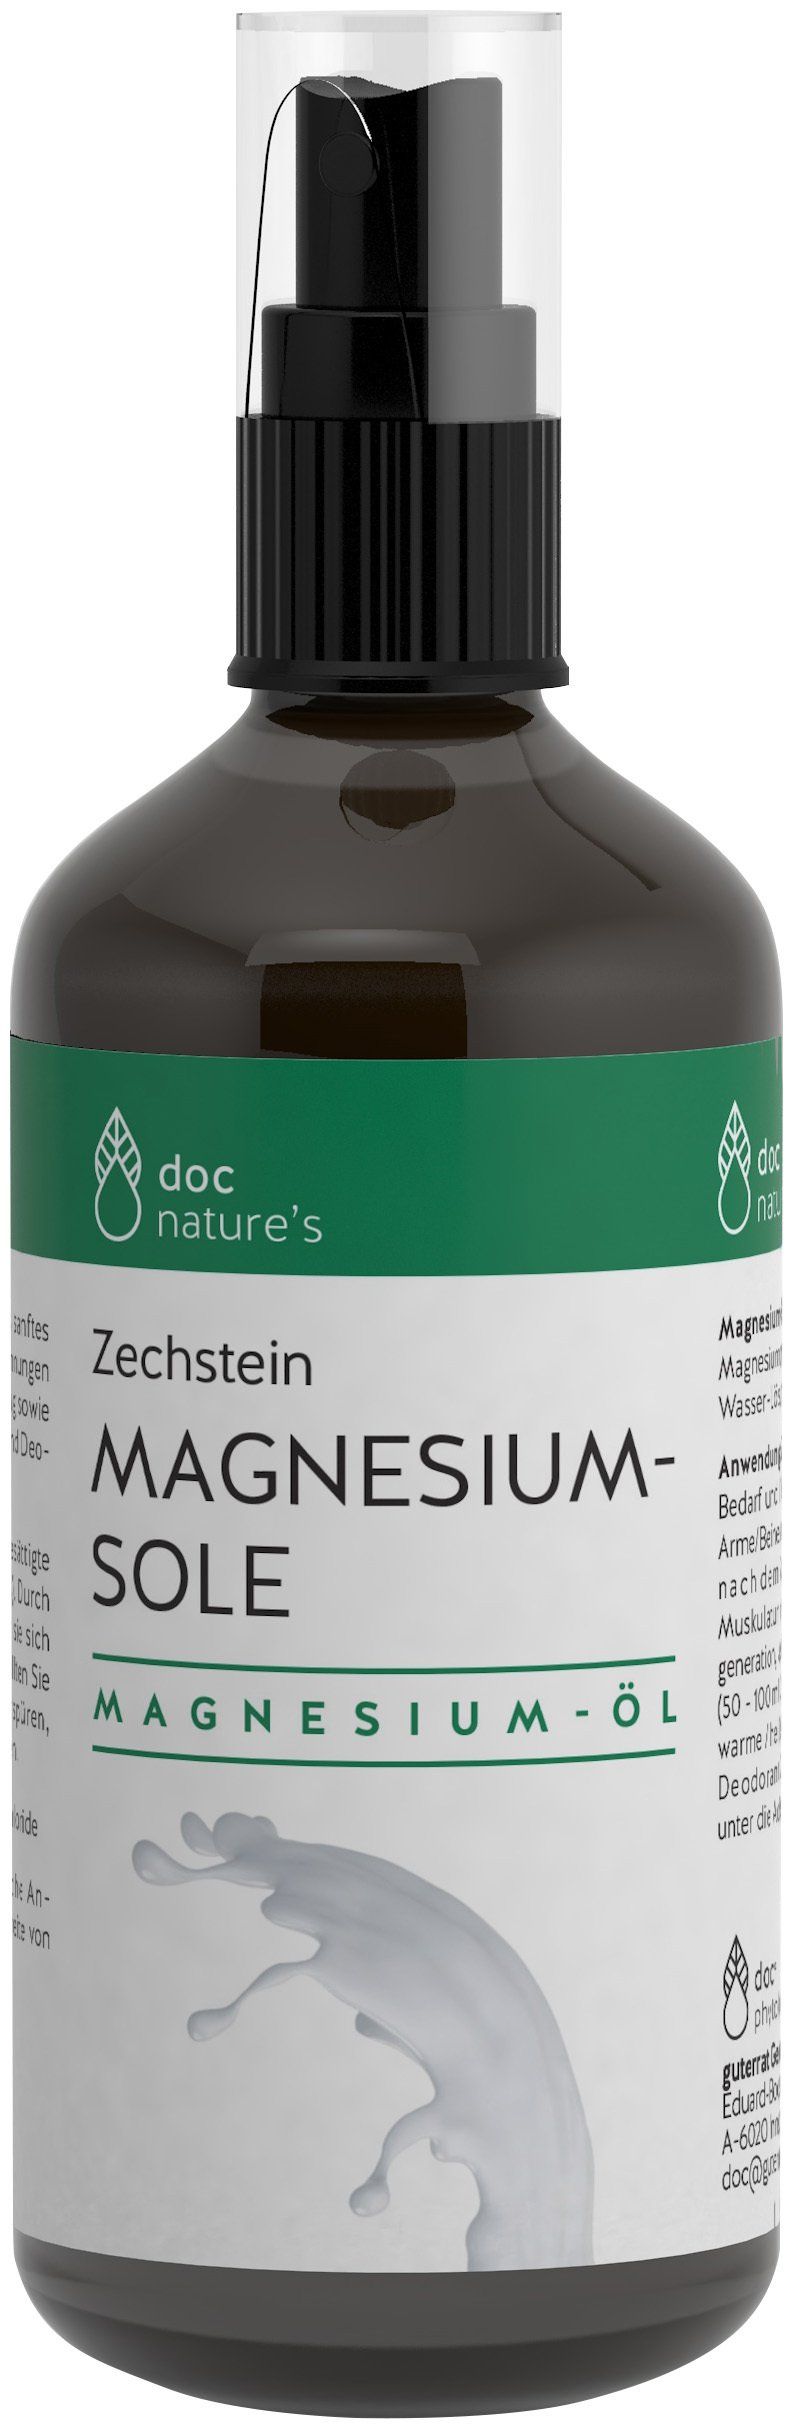 doc nature's Zechstein MAGNESIUM-SOLE MAGNESIUM-ÖL Spray